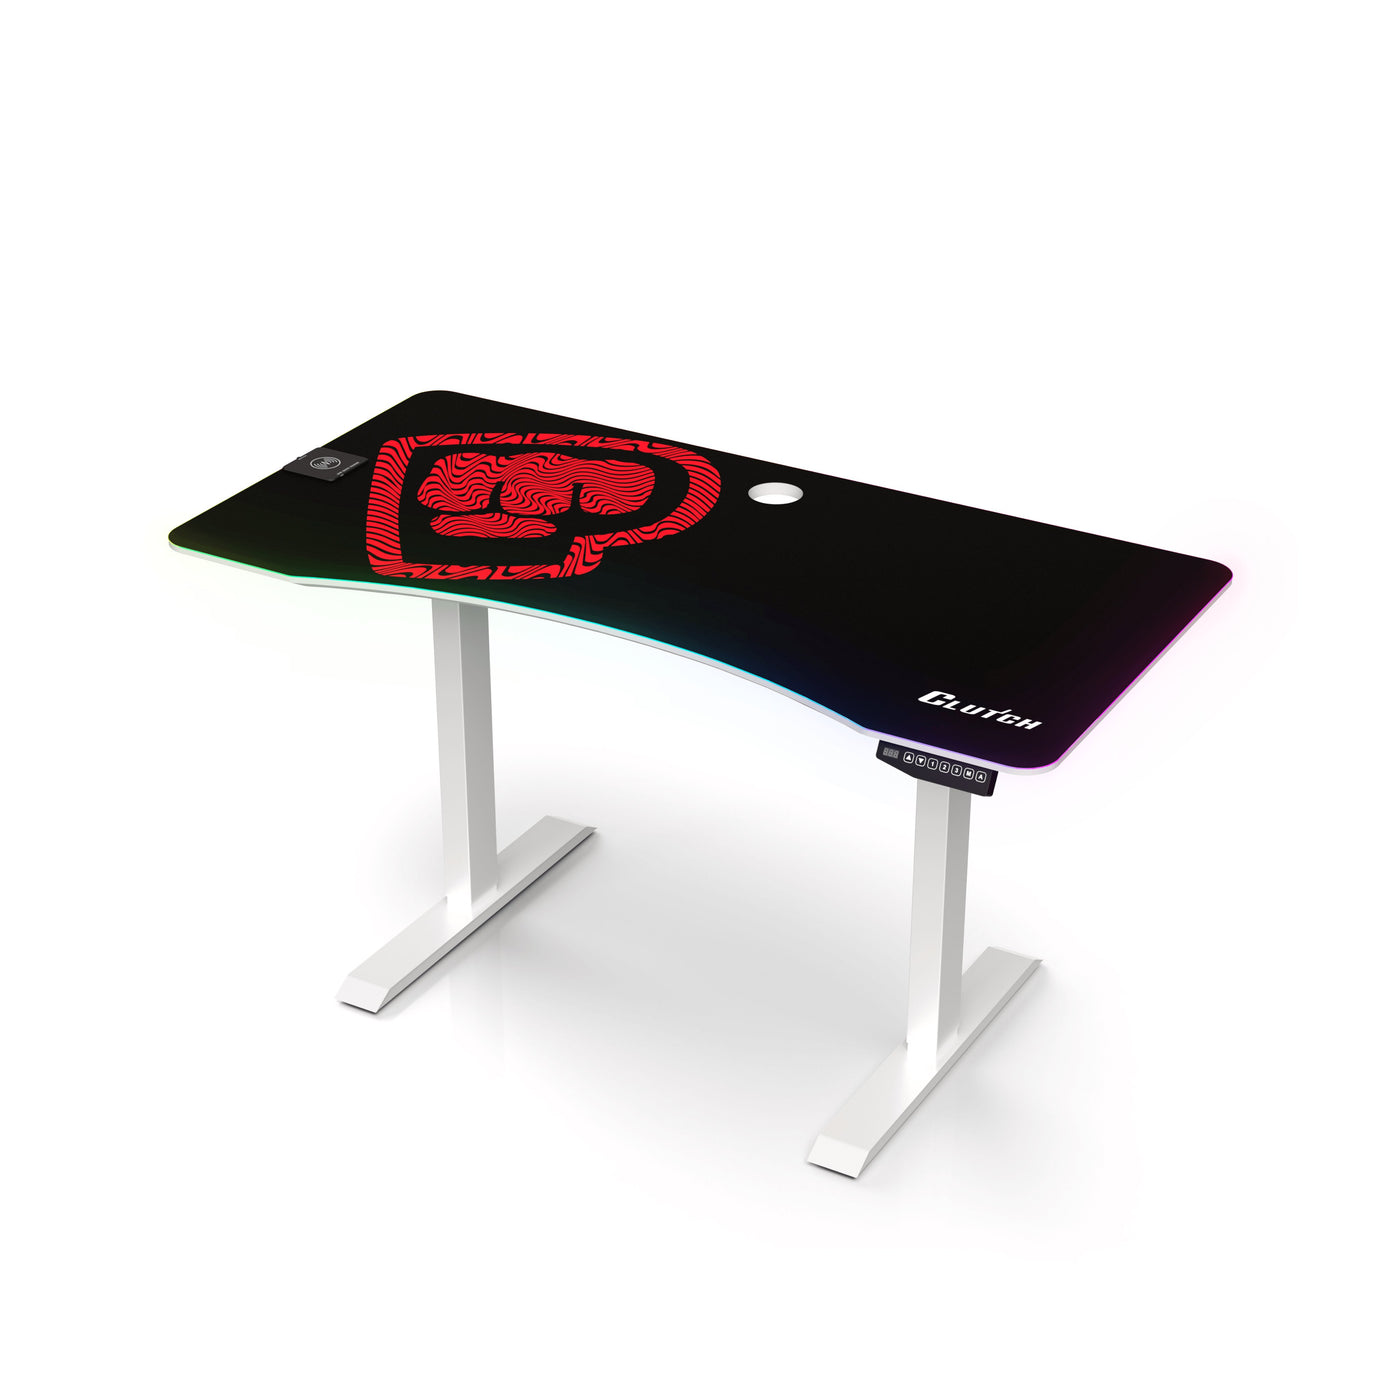 Pewdiepie Edition - Rise Desk Clutch Chairz White Sit-Stand Desk 